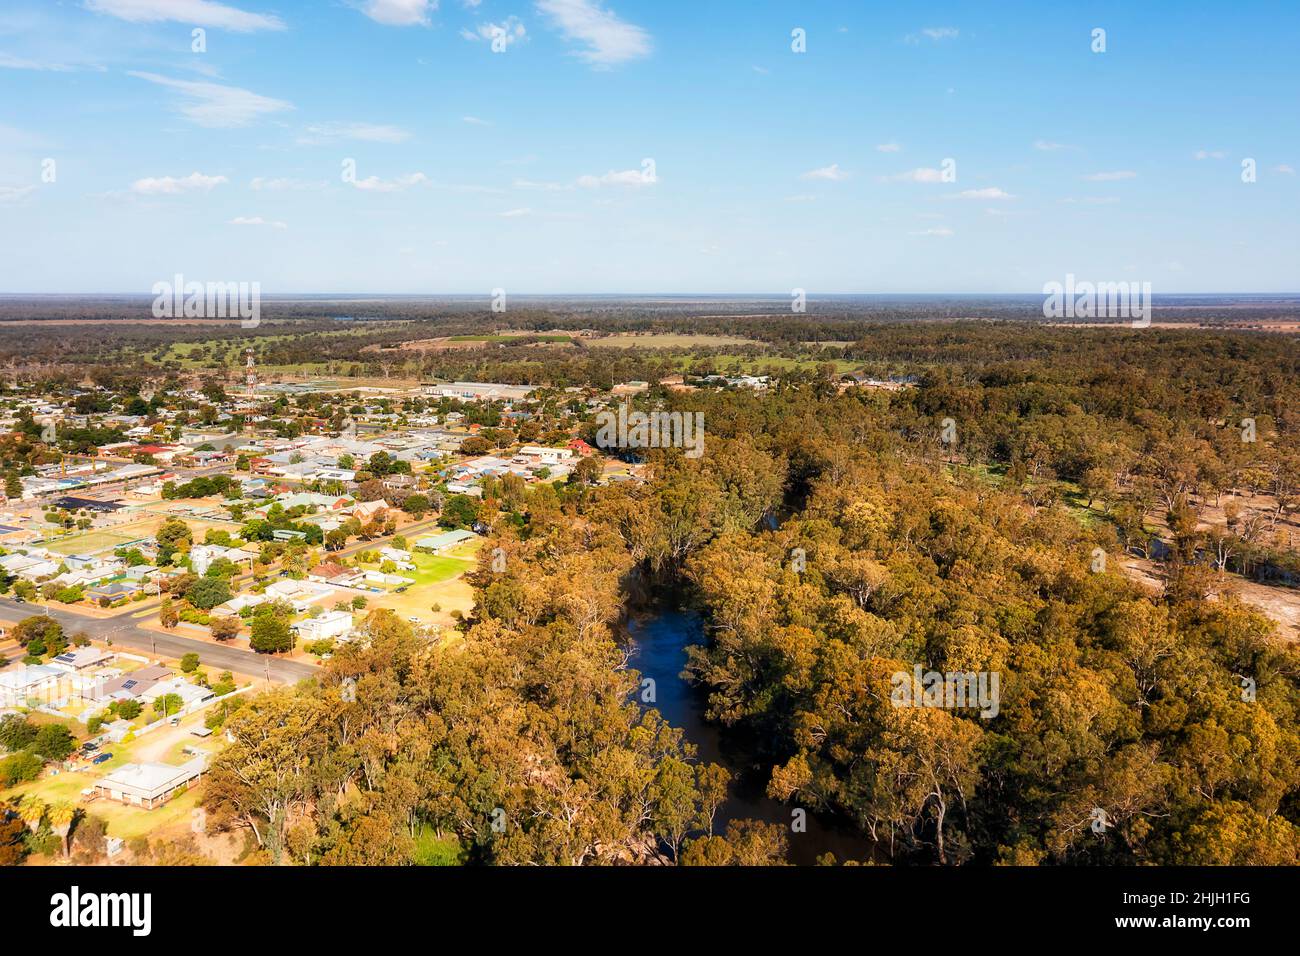 Balranald Stadt in den australischen Outback Ebenen am Murrumbidgee Fluss - Luftlandschaft. Stockfoto